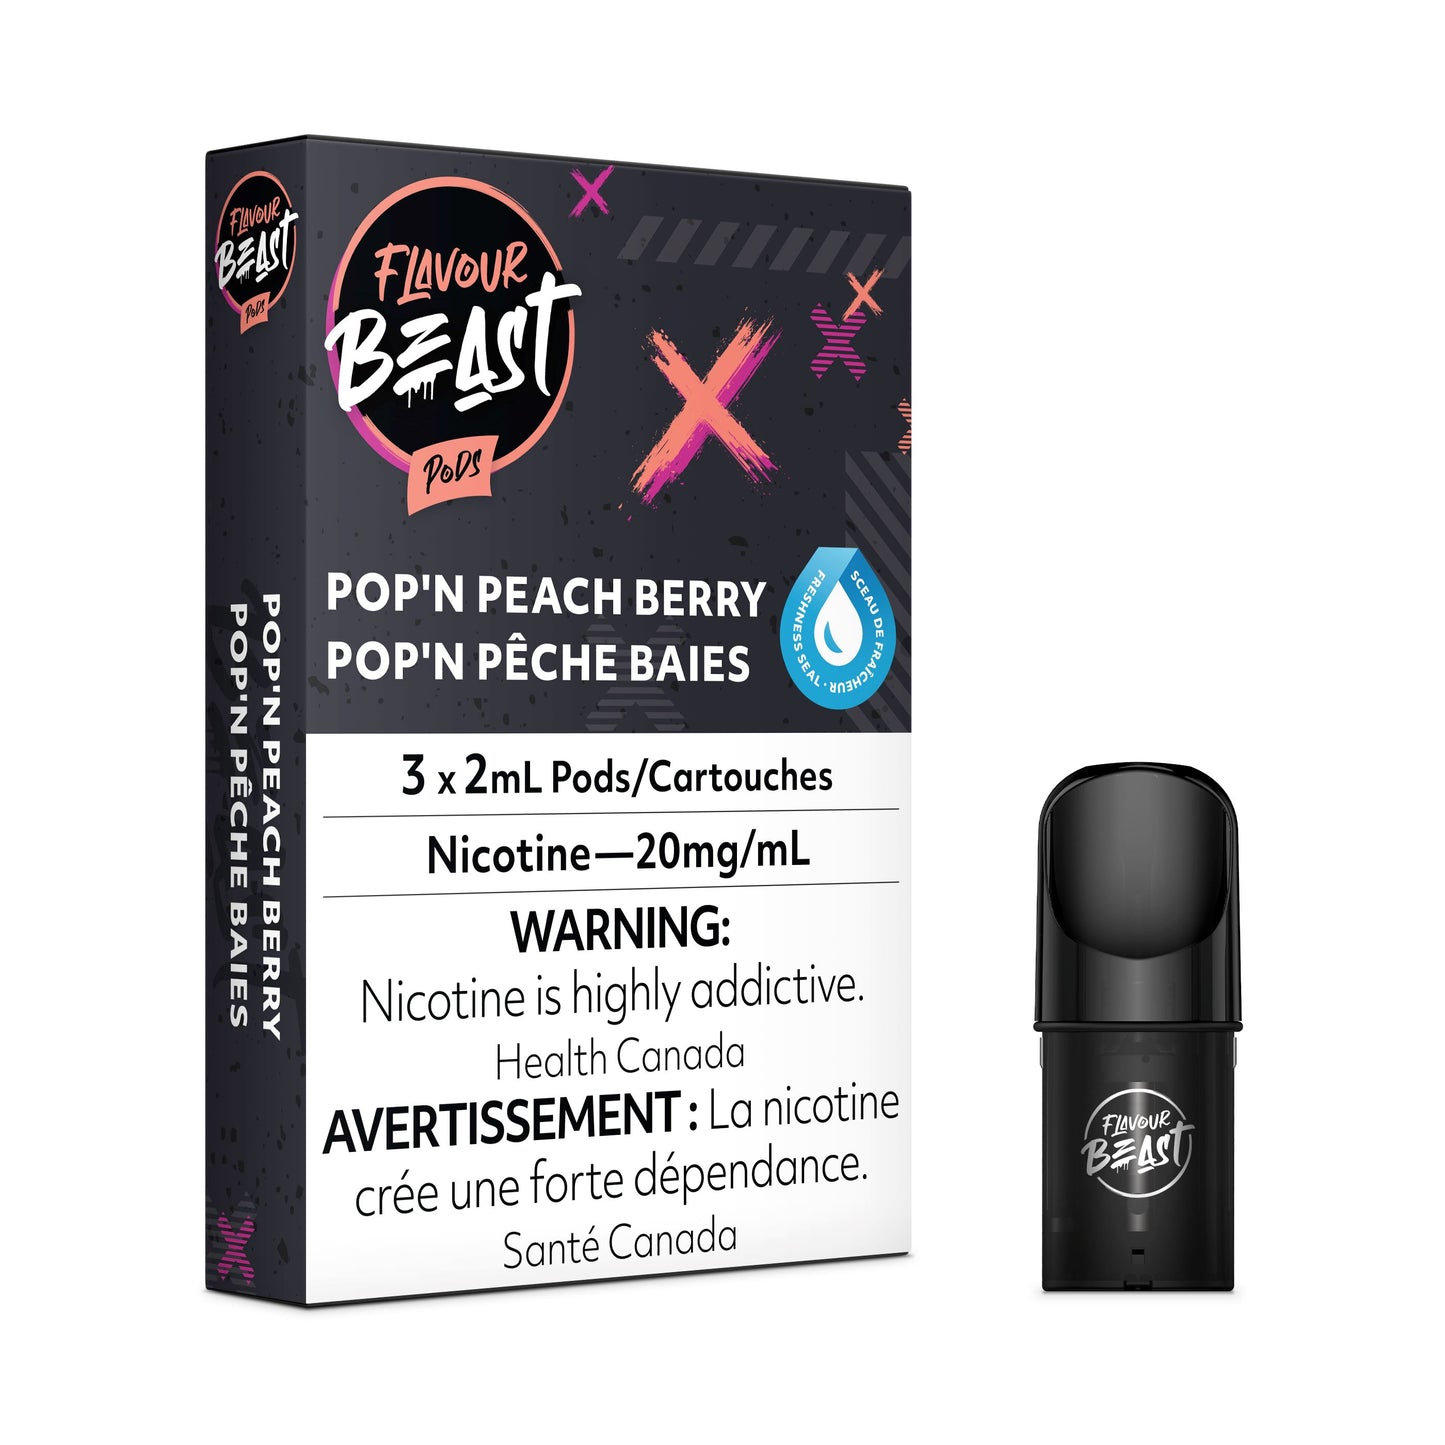 Pop'n Peach Berry - FB CLOSED PODS Flavour Beast Flow 